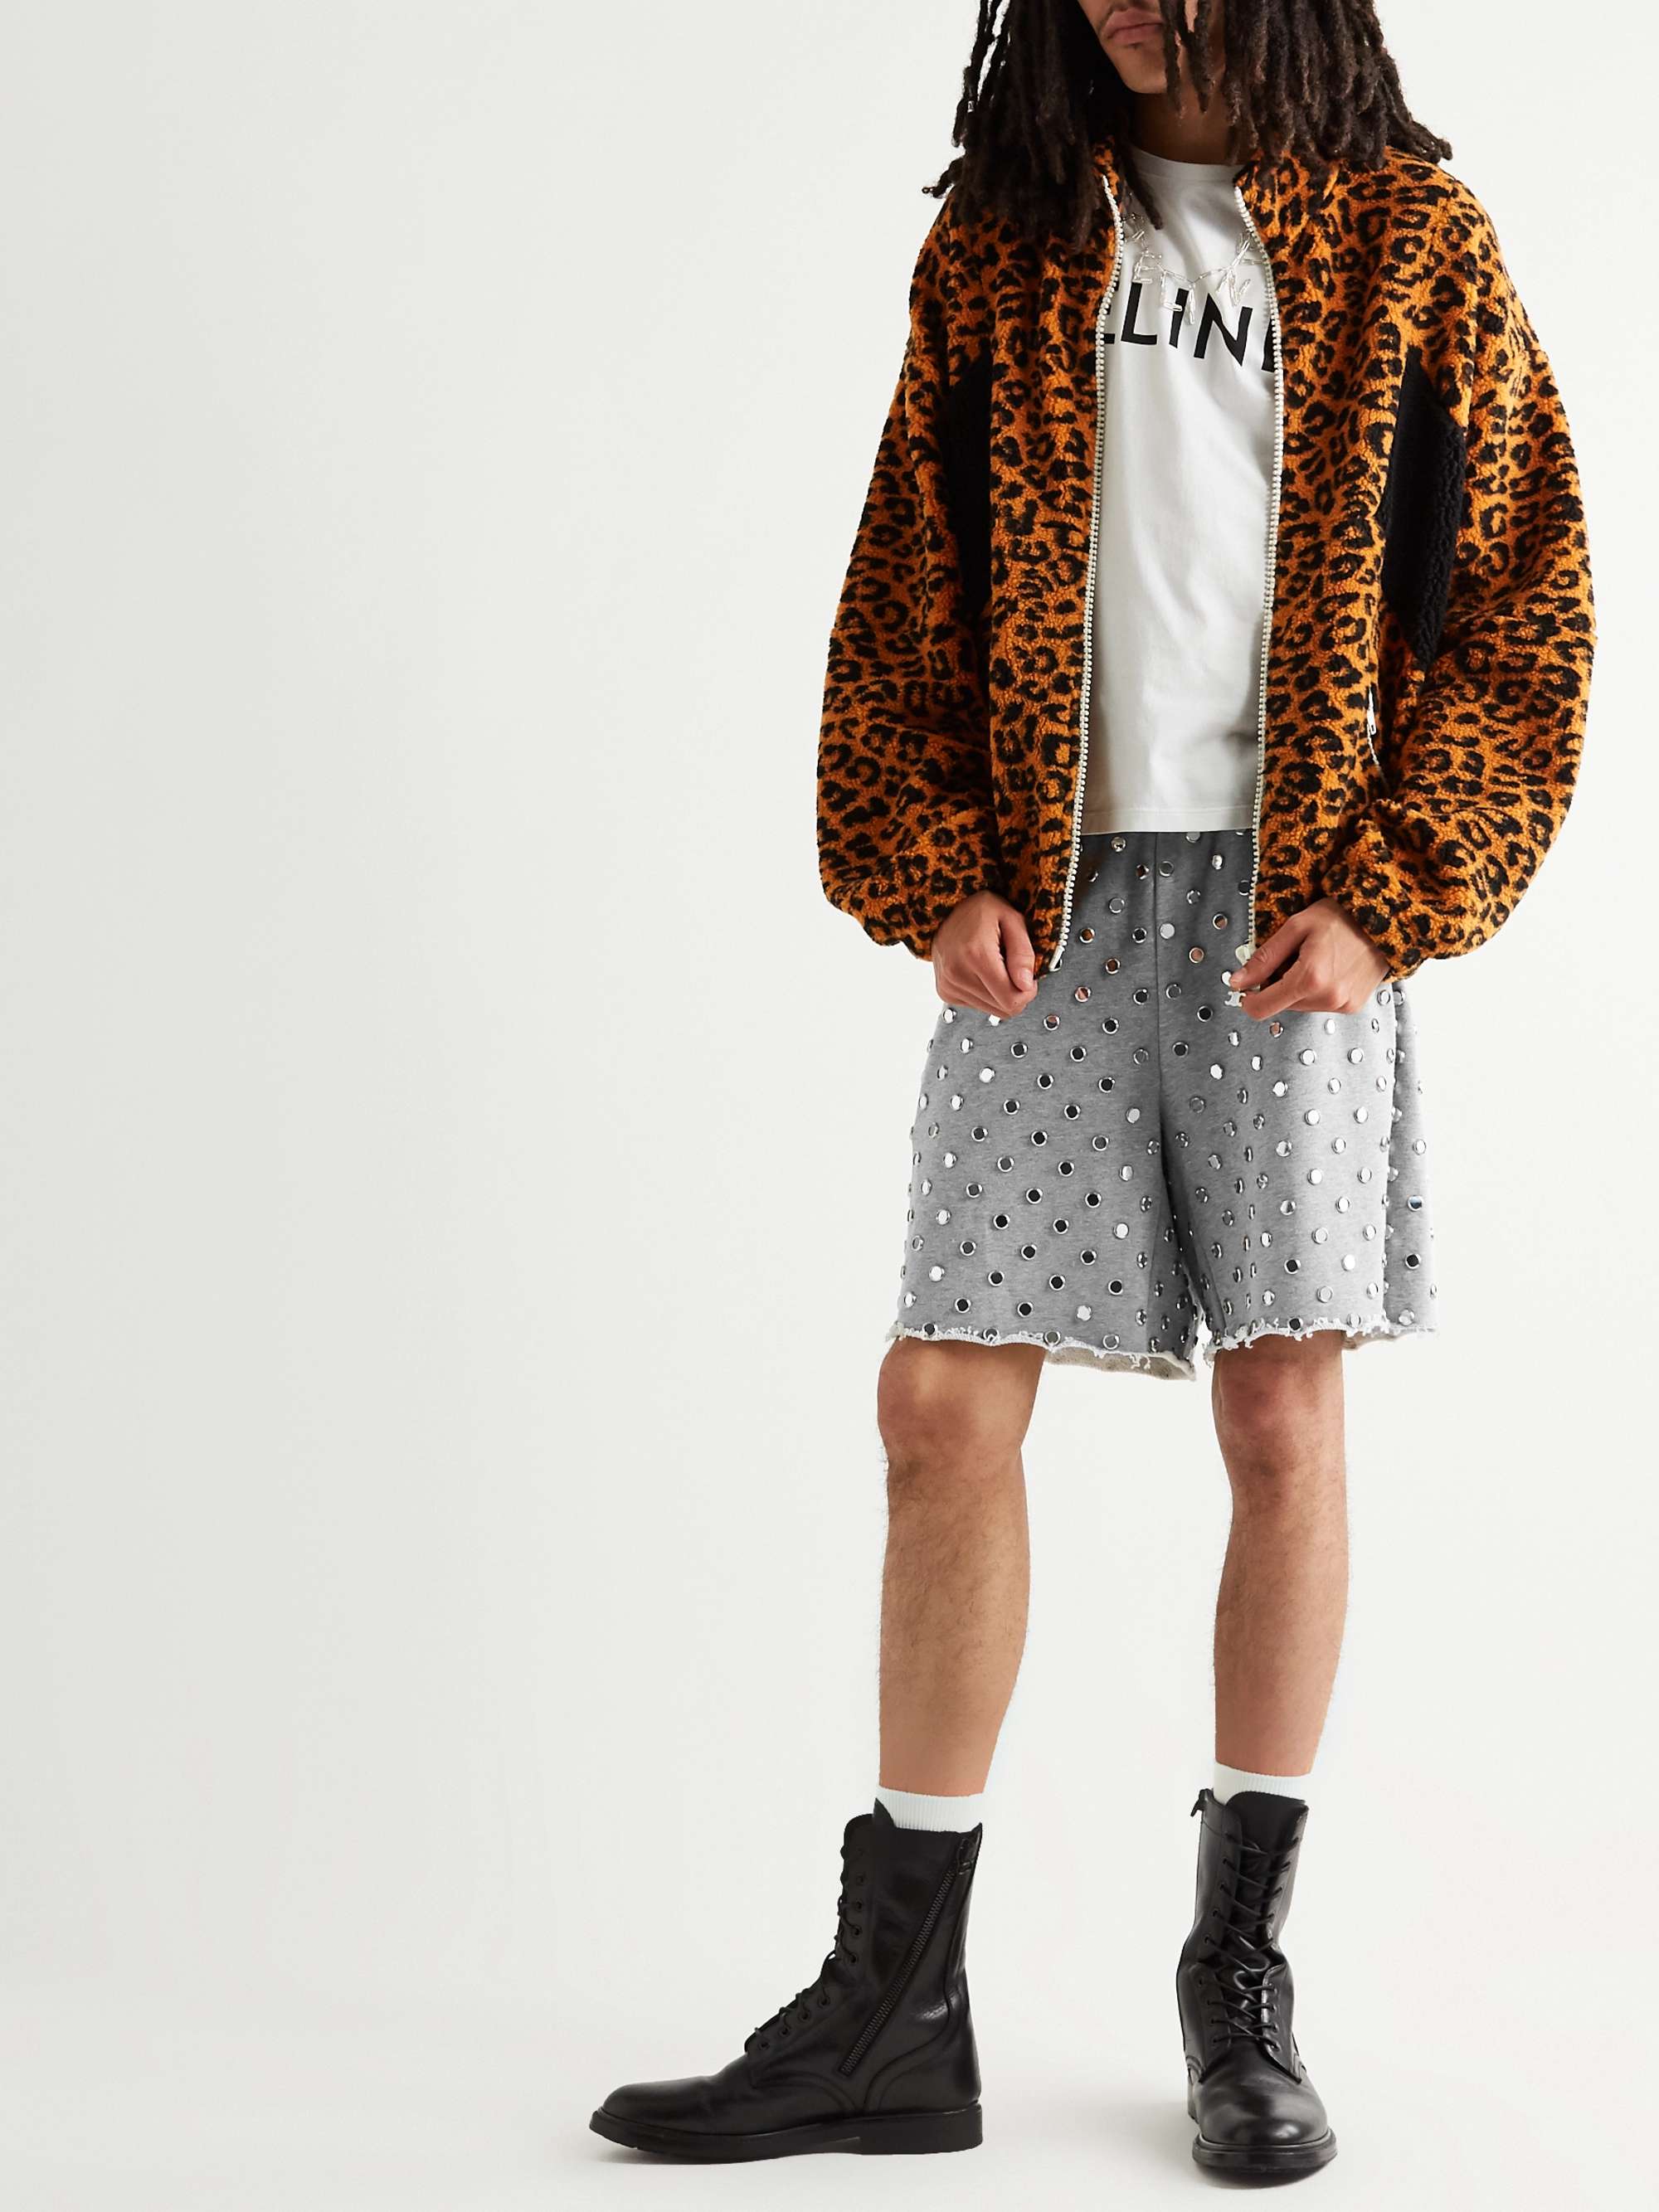 CELINE HOMME Leopard-Print Fleece Track Jacket